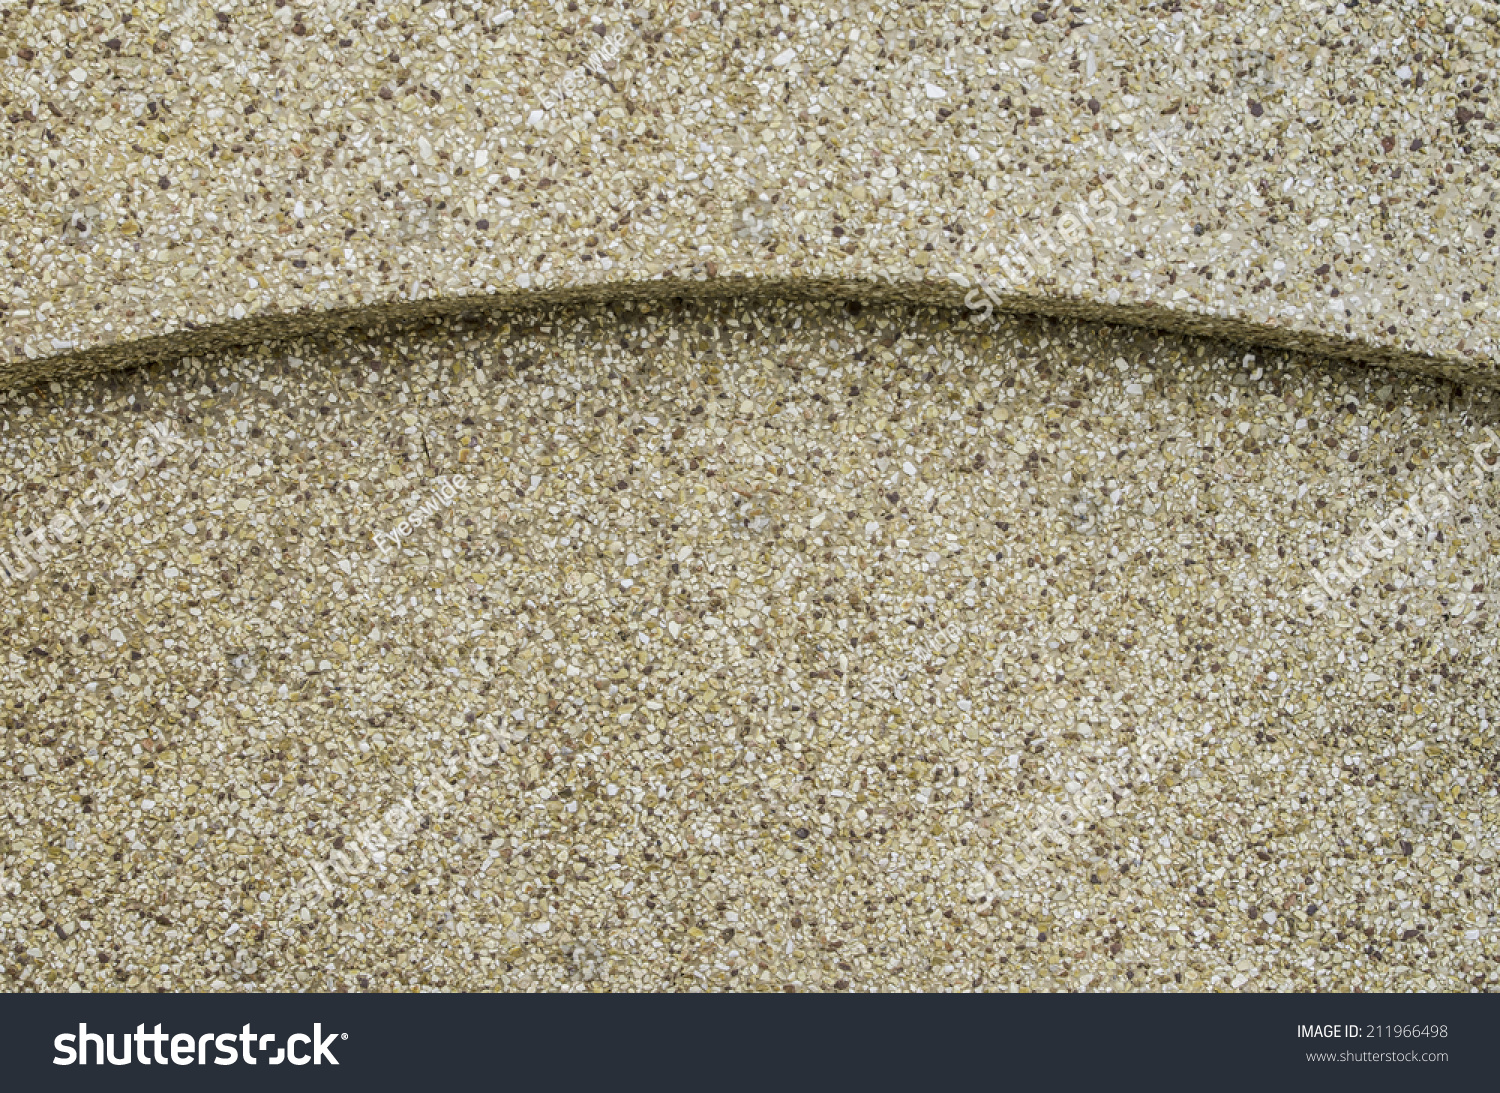 Surface Texture Fine Mix Size Gravel Stock Photo 211966498 | Shutterstock